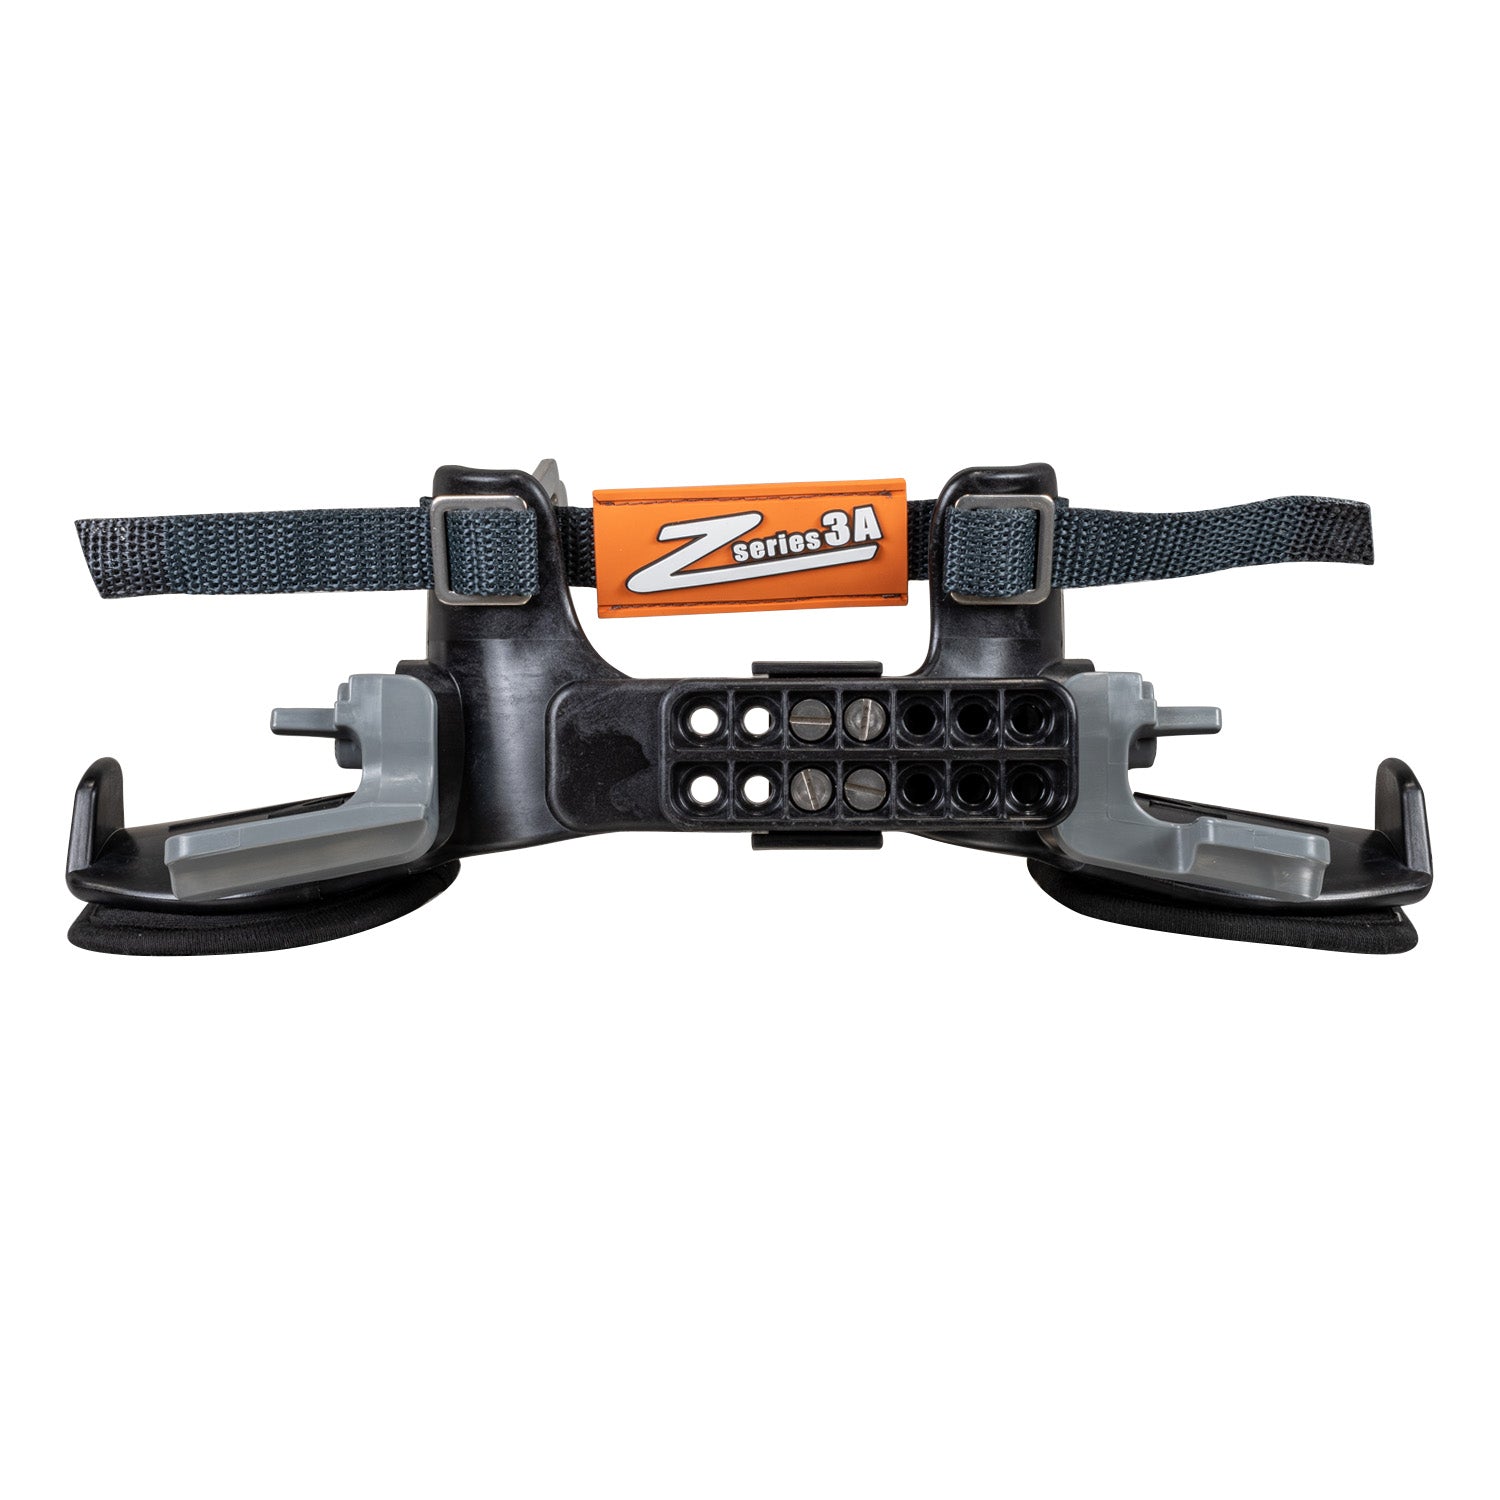 Zamp Z-Tech Series 3A, SFI 38.1 Certified